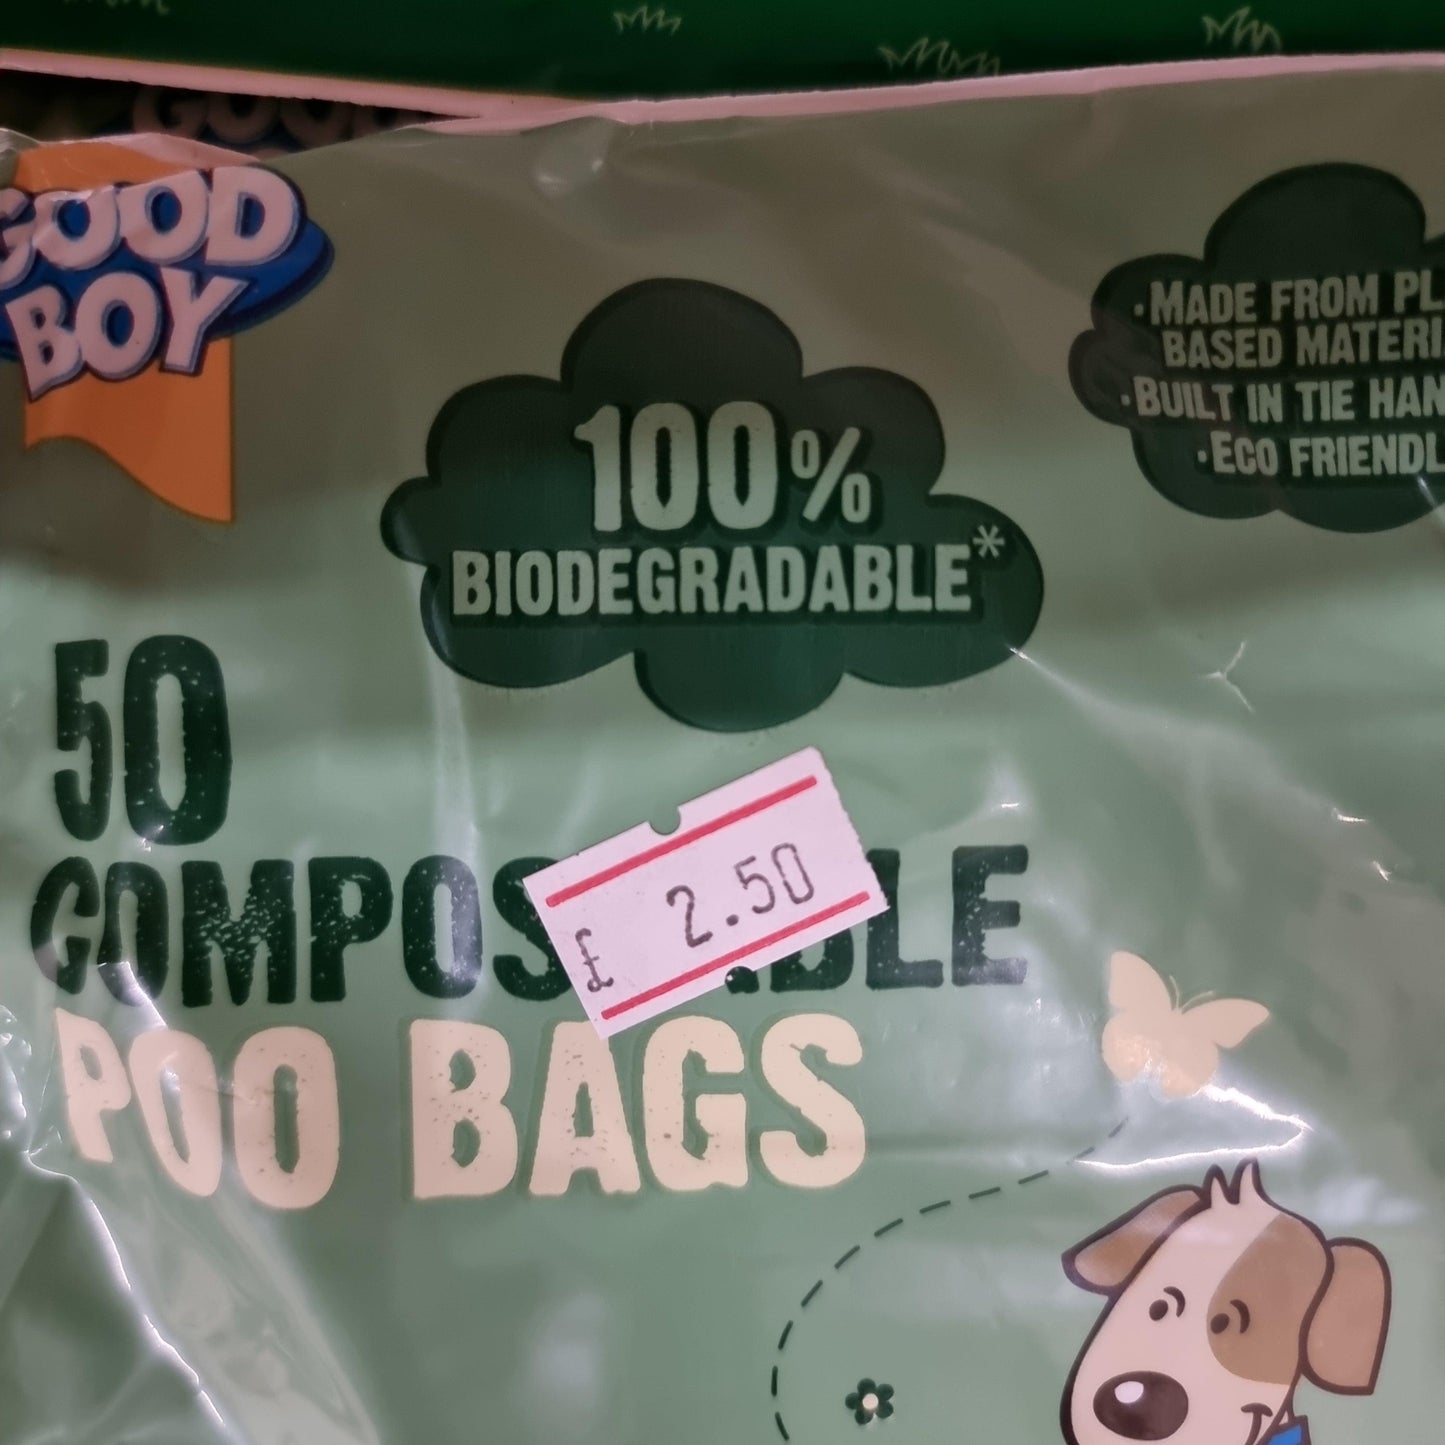 Good Boy Compostable Poo Bags - 50 Pack - North East Pet Shop Good Boy